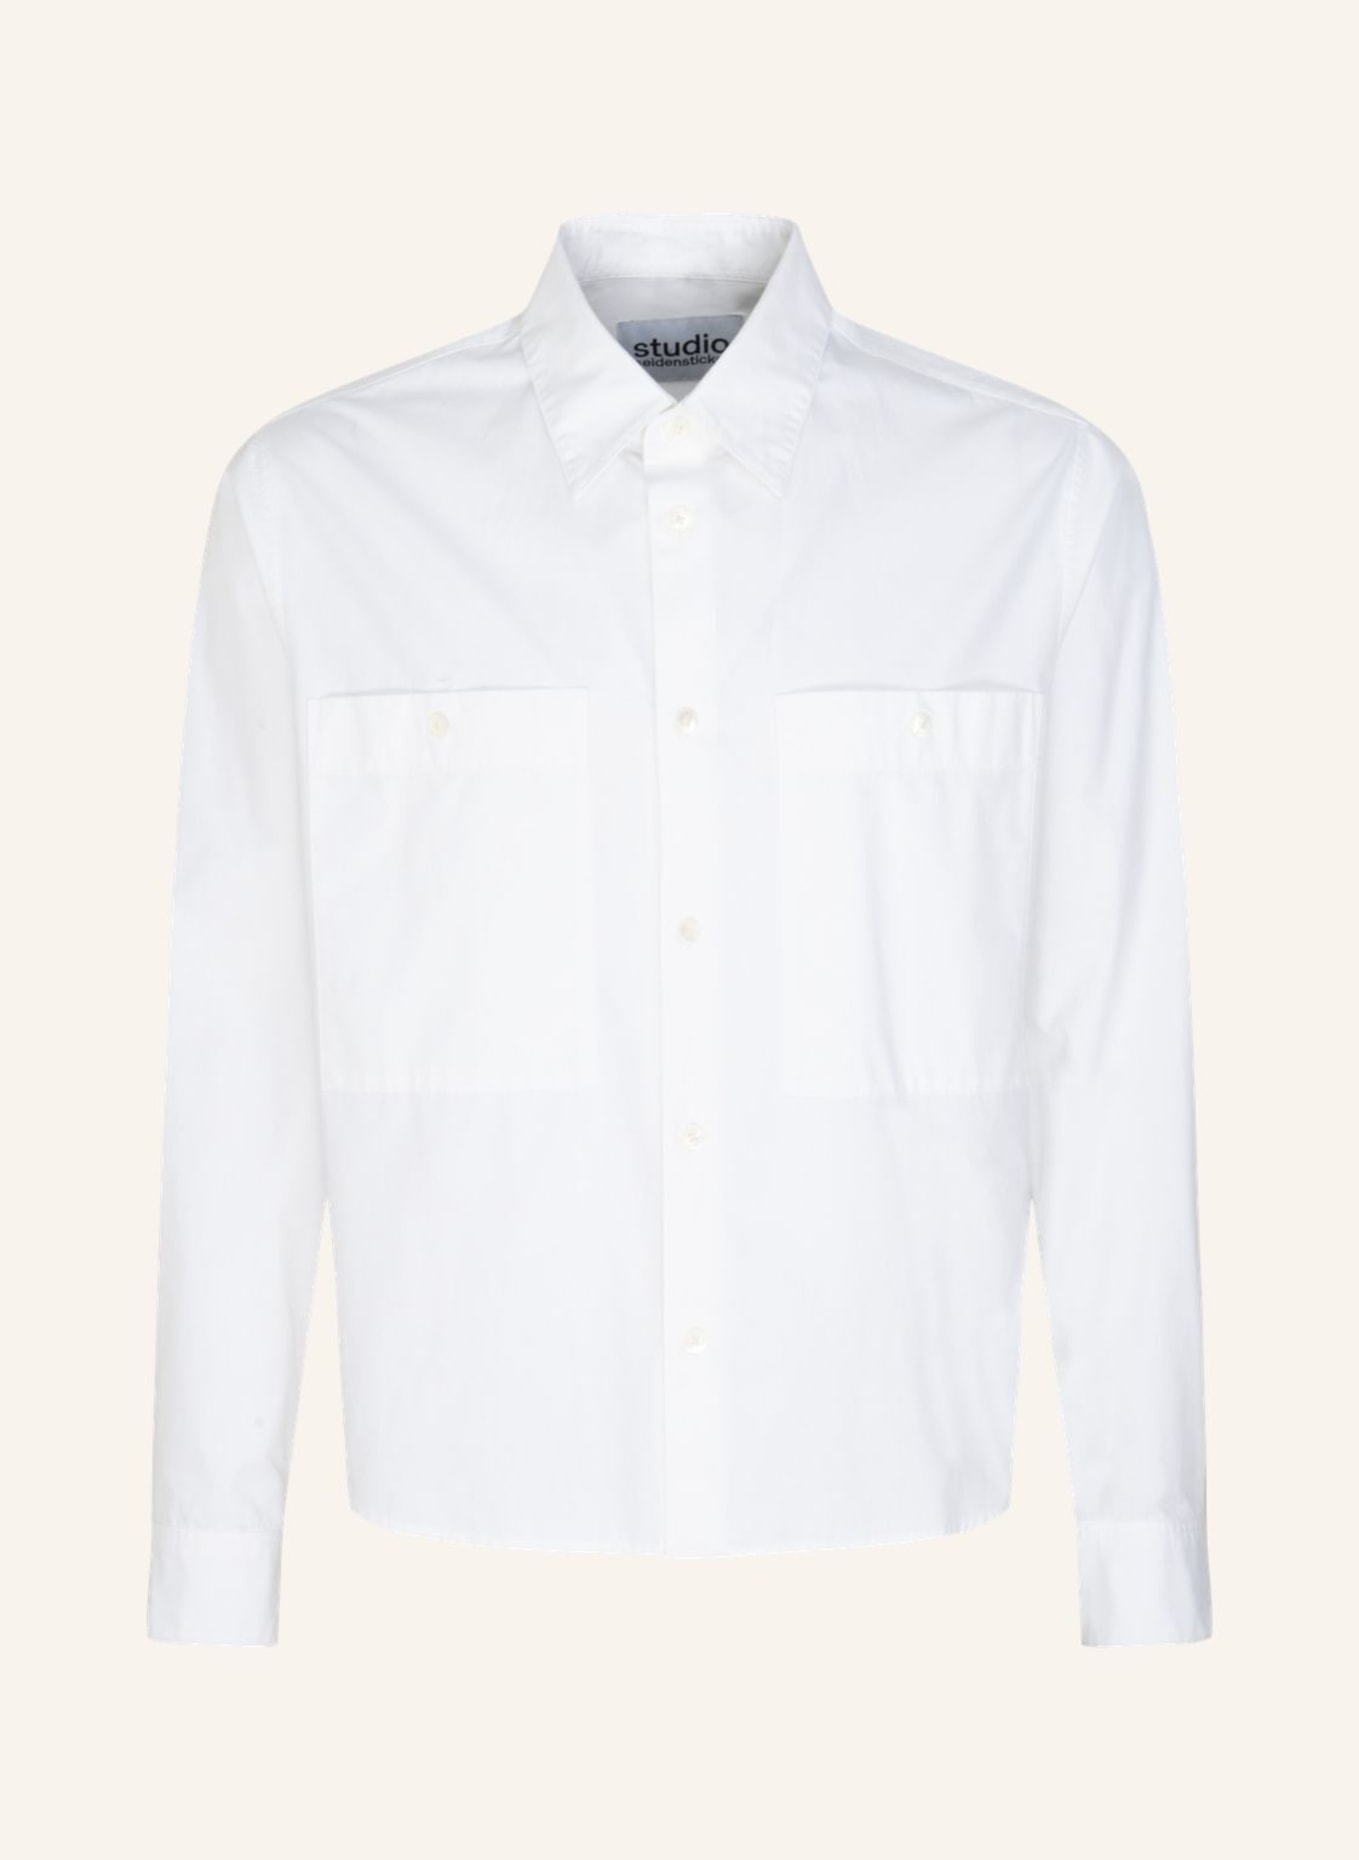 studio seidensticker Casual Hemd, Hemd Regular Fit, Farbe: WEISS (Bild 1)